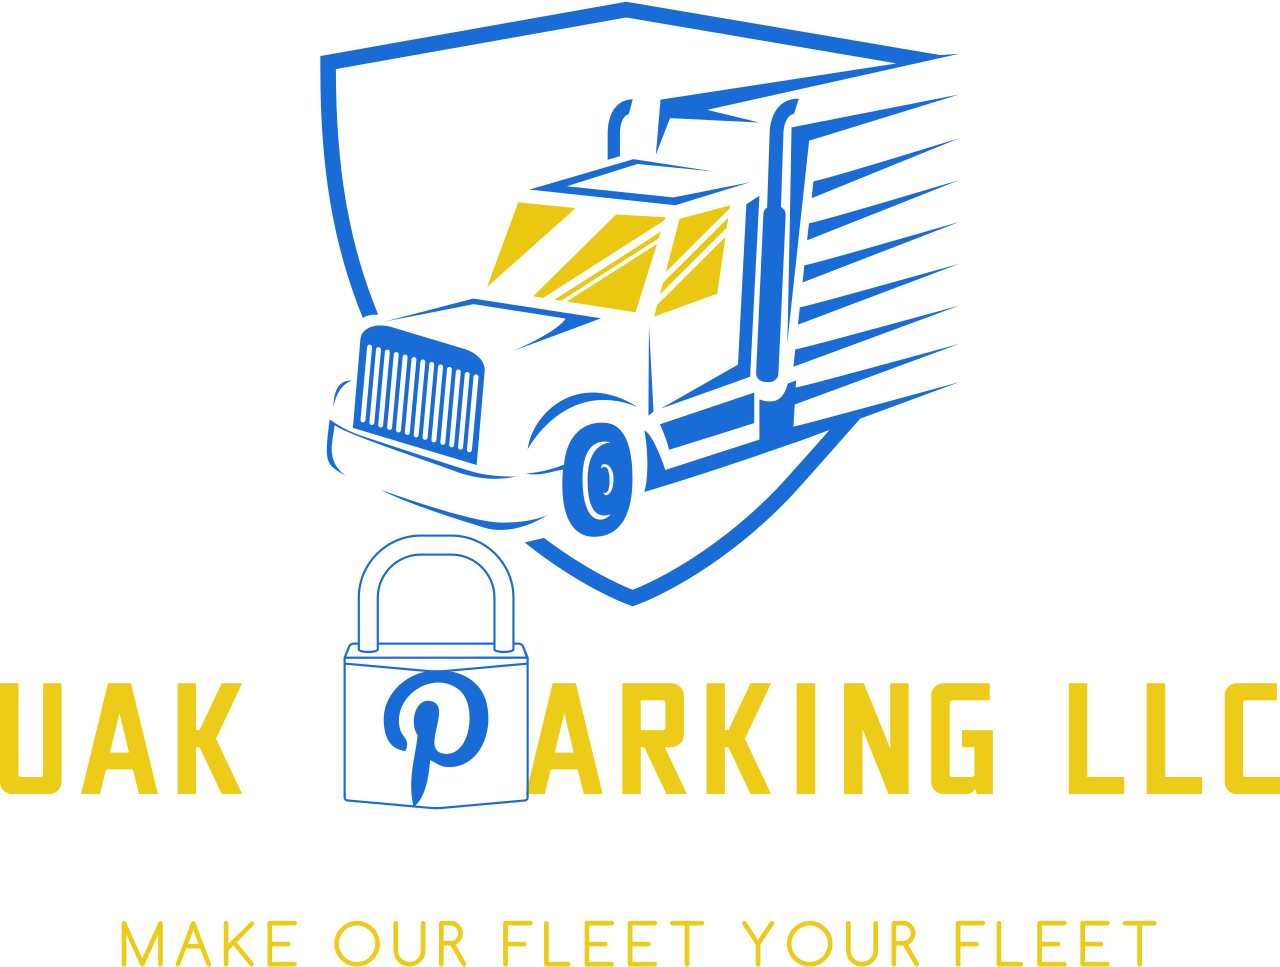 Uak  Parking LLC's logo